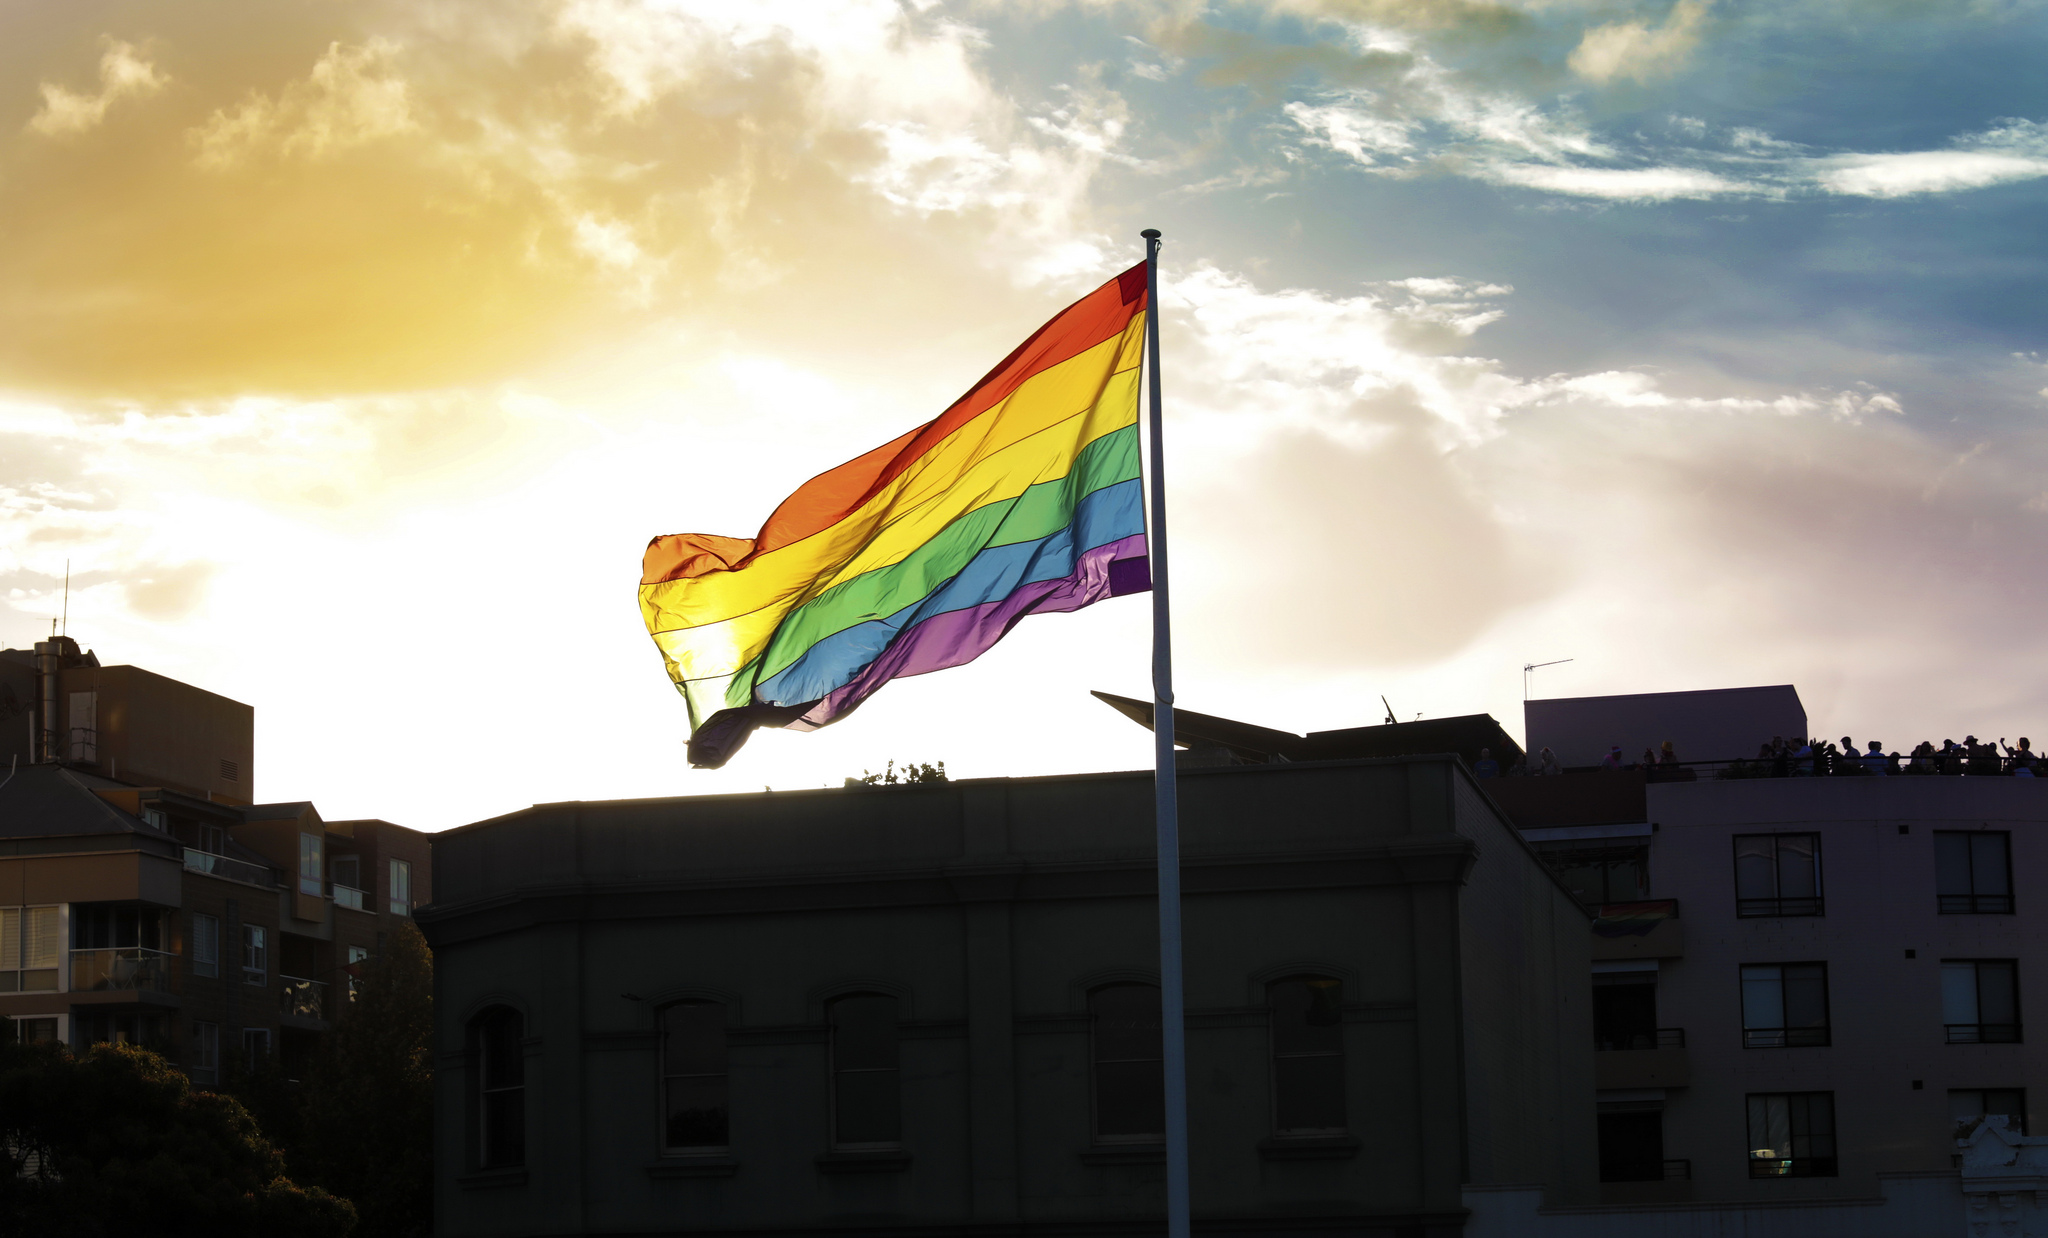 Radio host slams local council’s decision to fly rainbow flag in place of Australian flag